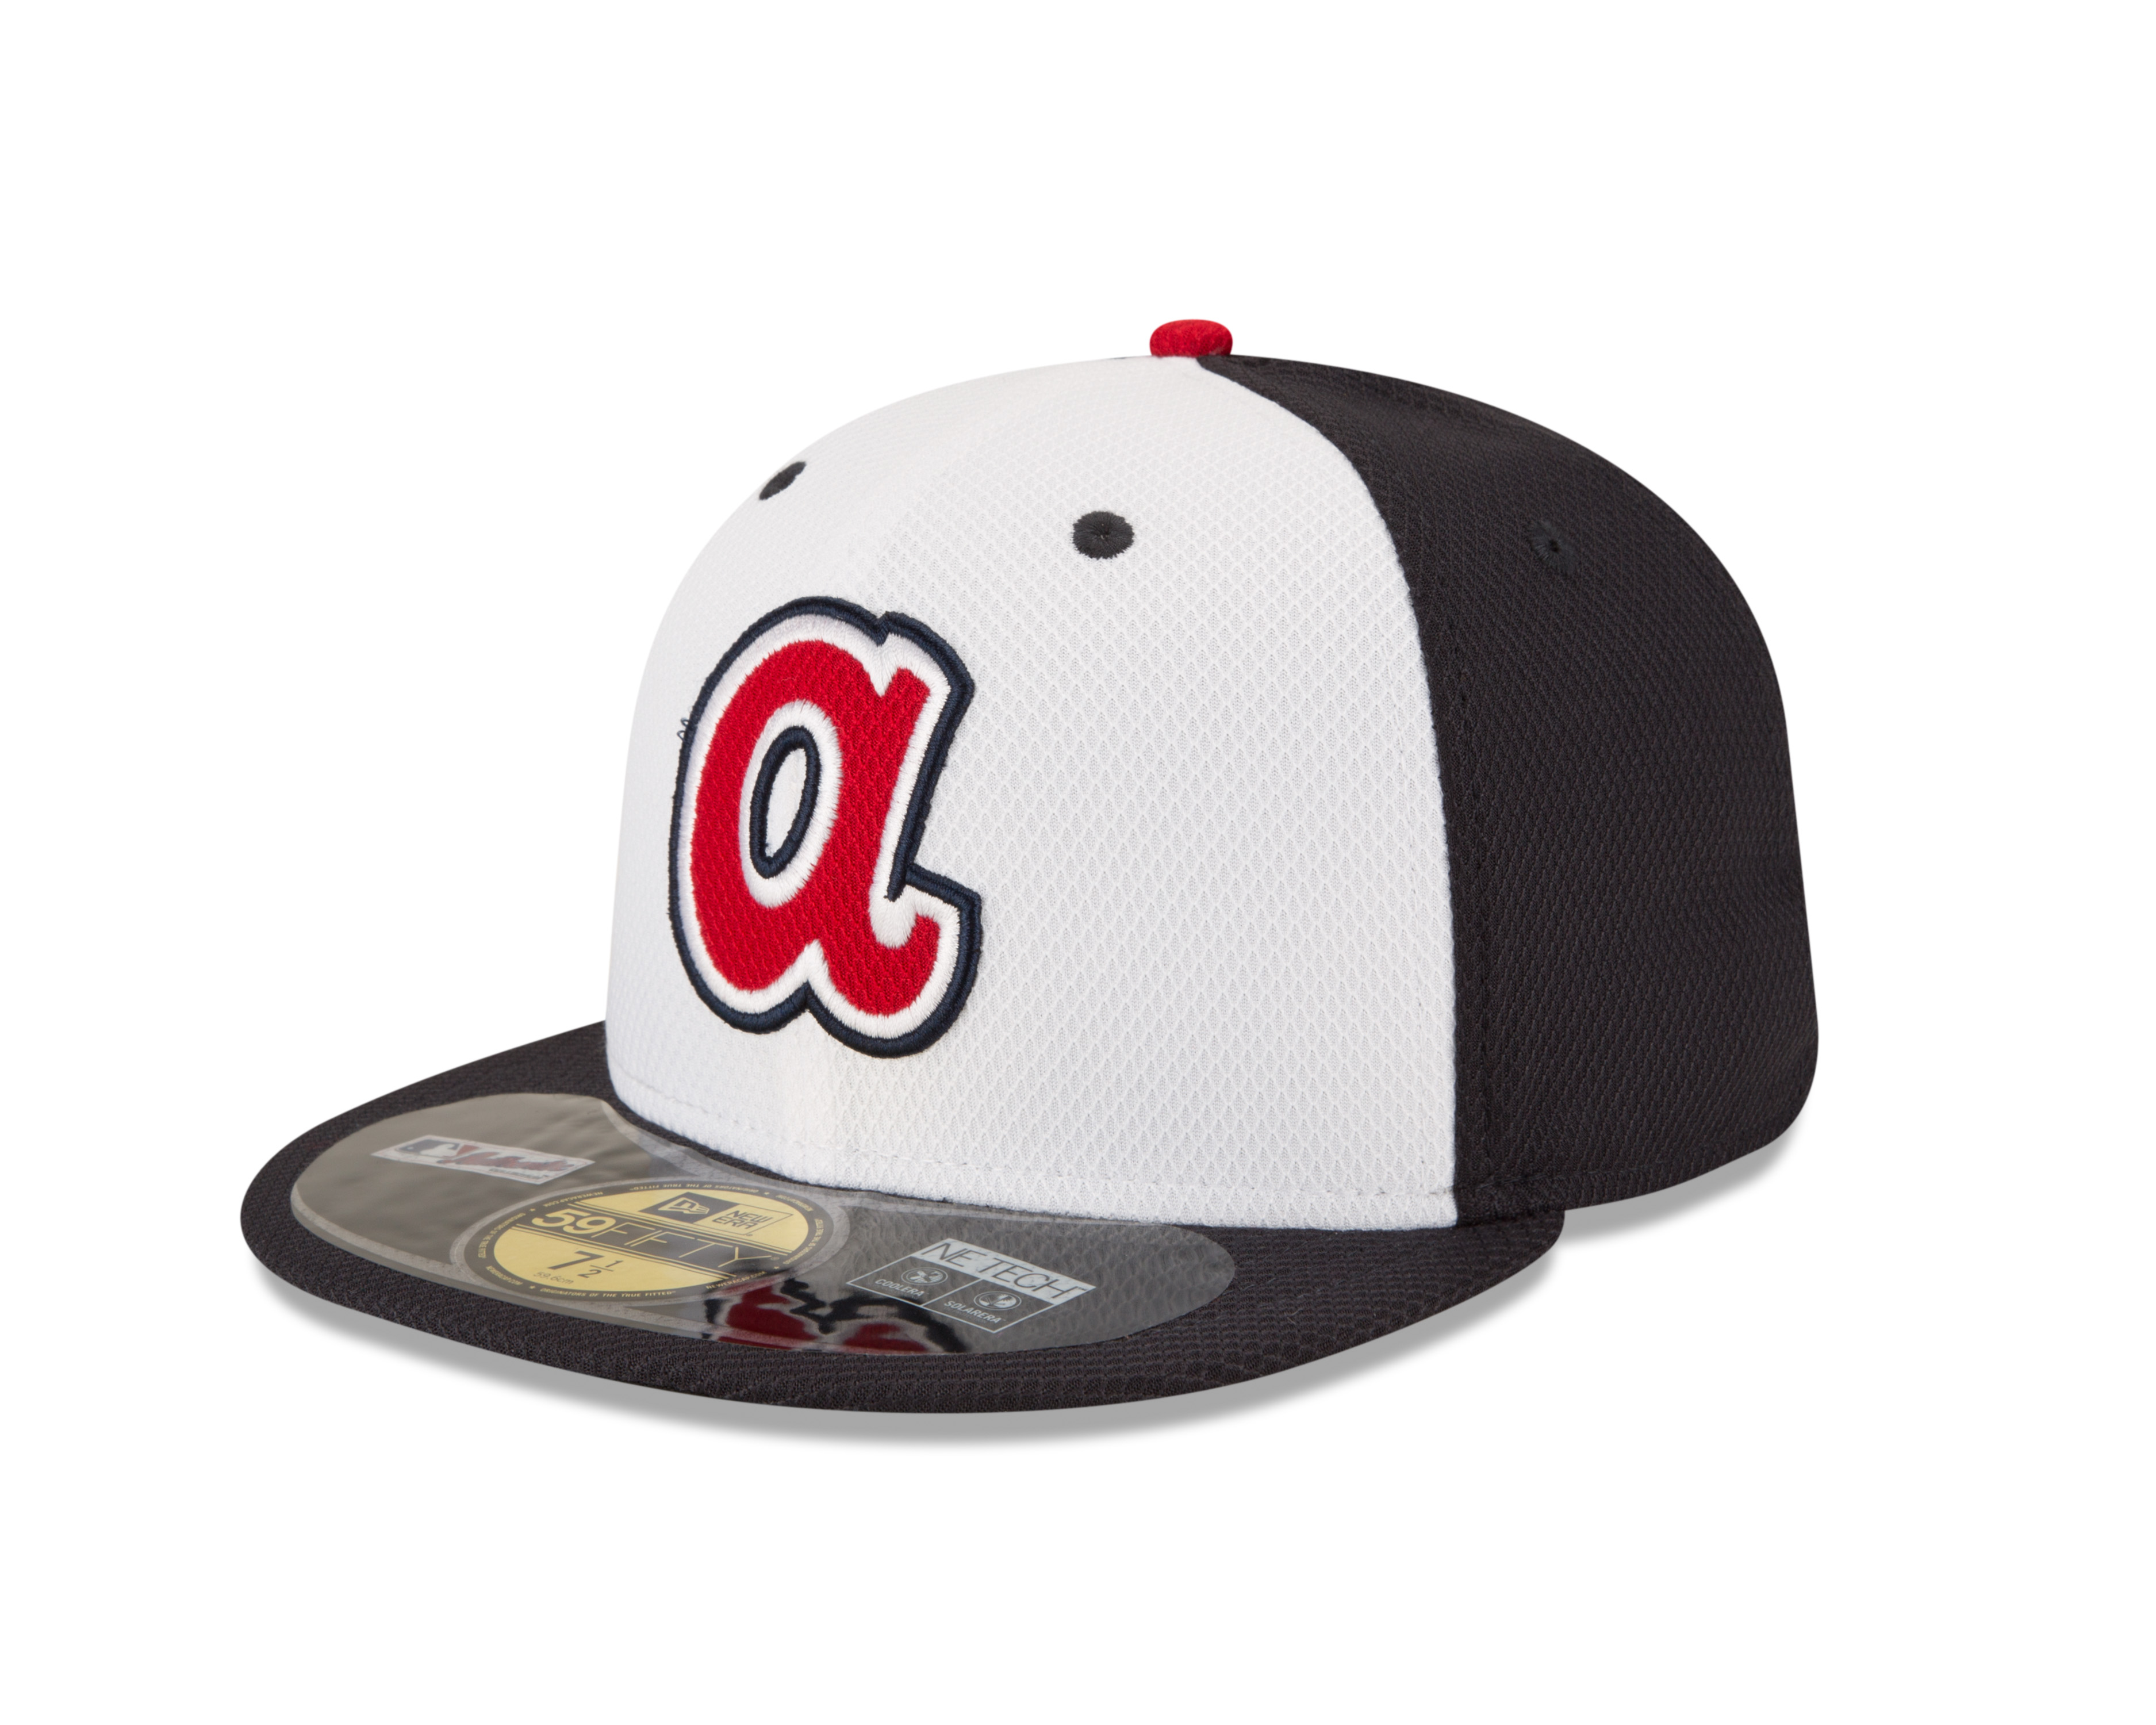 NEW New Era Atlanta Braves Batting Practice Hat BP Cap MLB Small Baseball